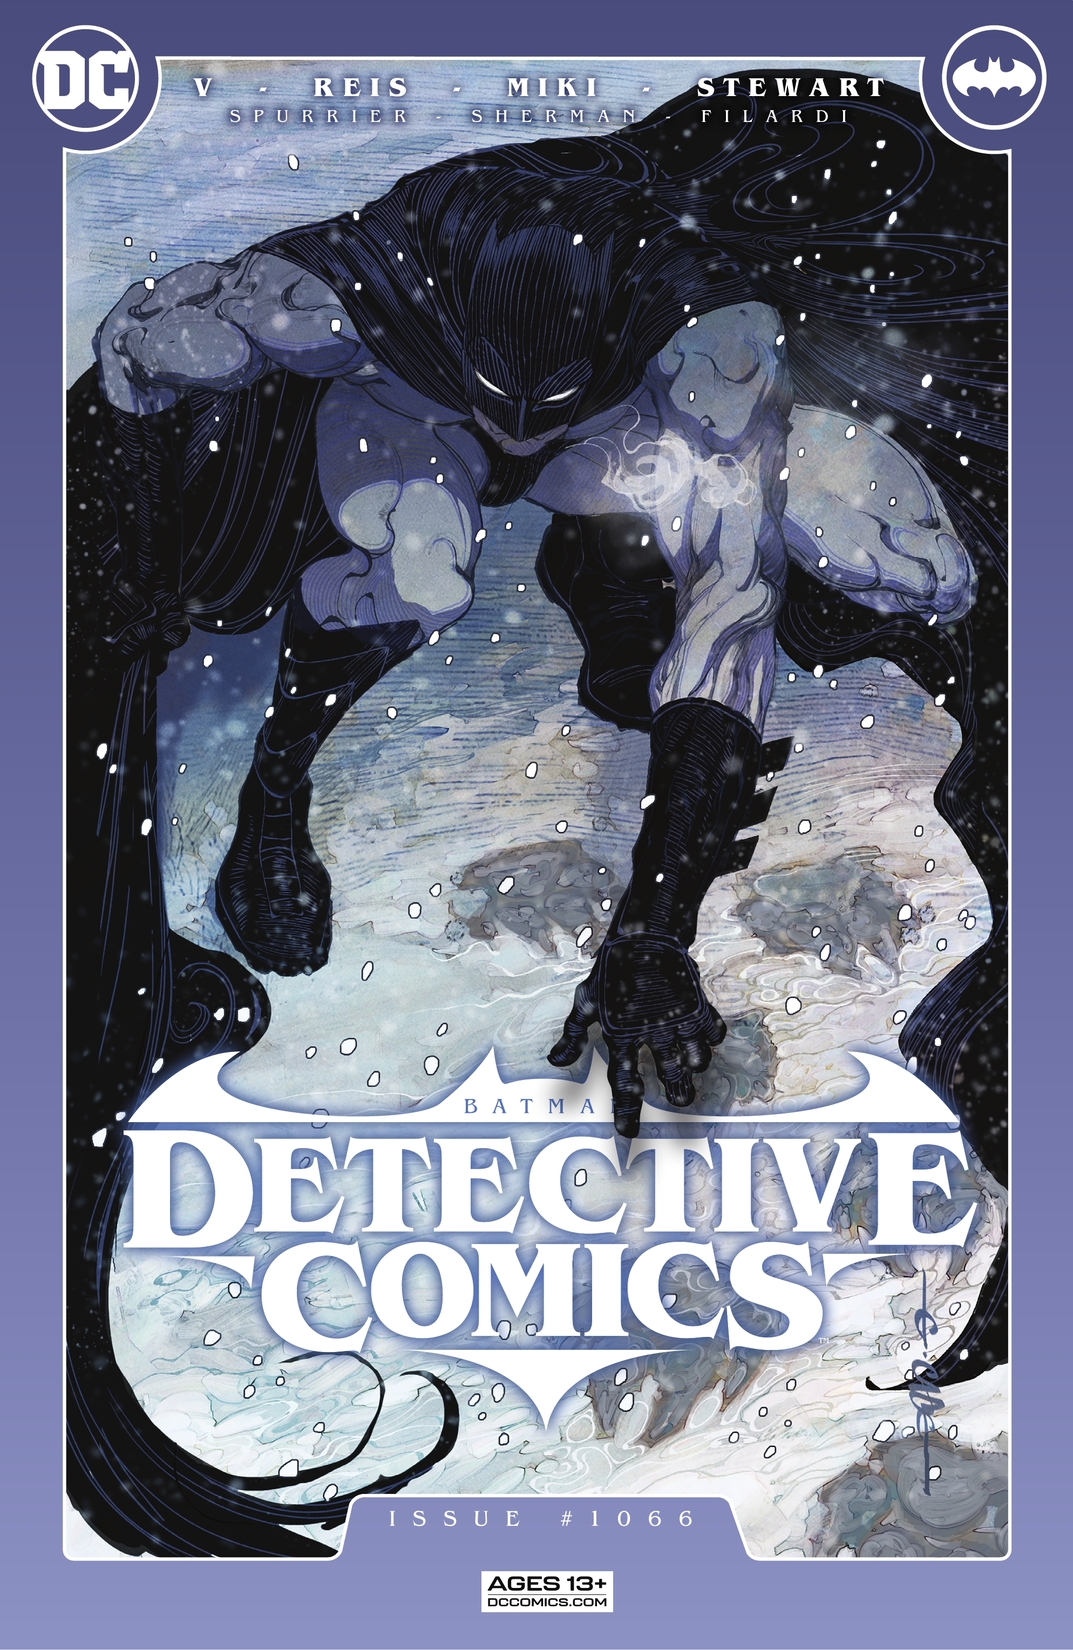 Detective Comics (2016-) #1066 preview images